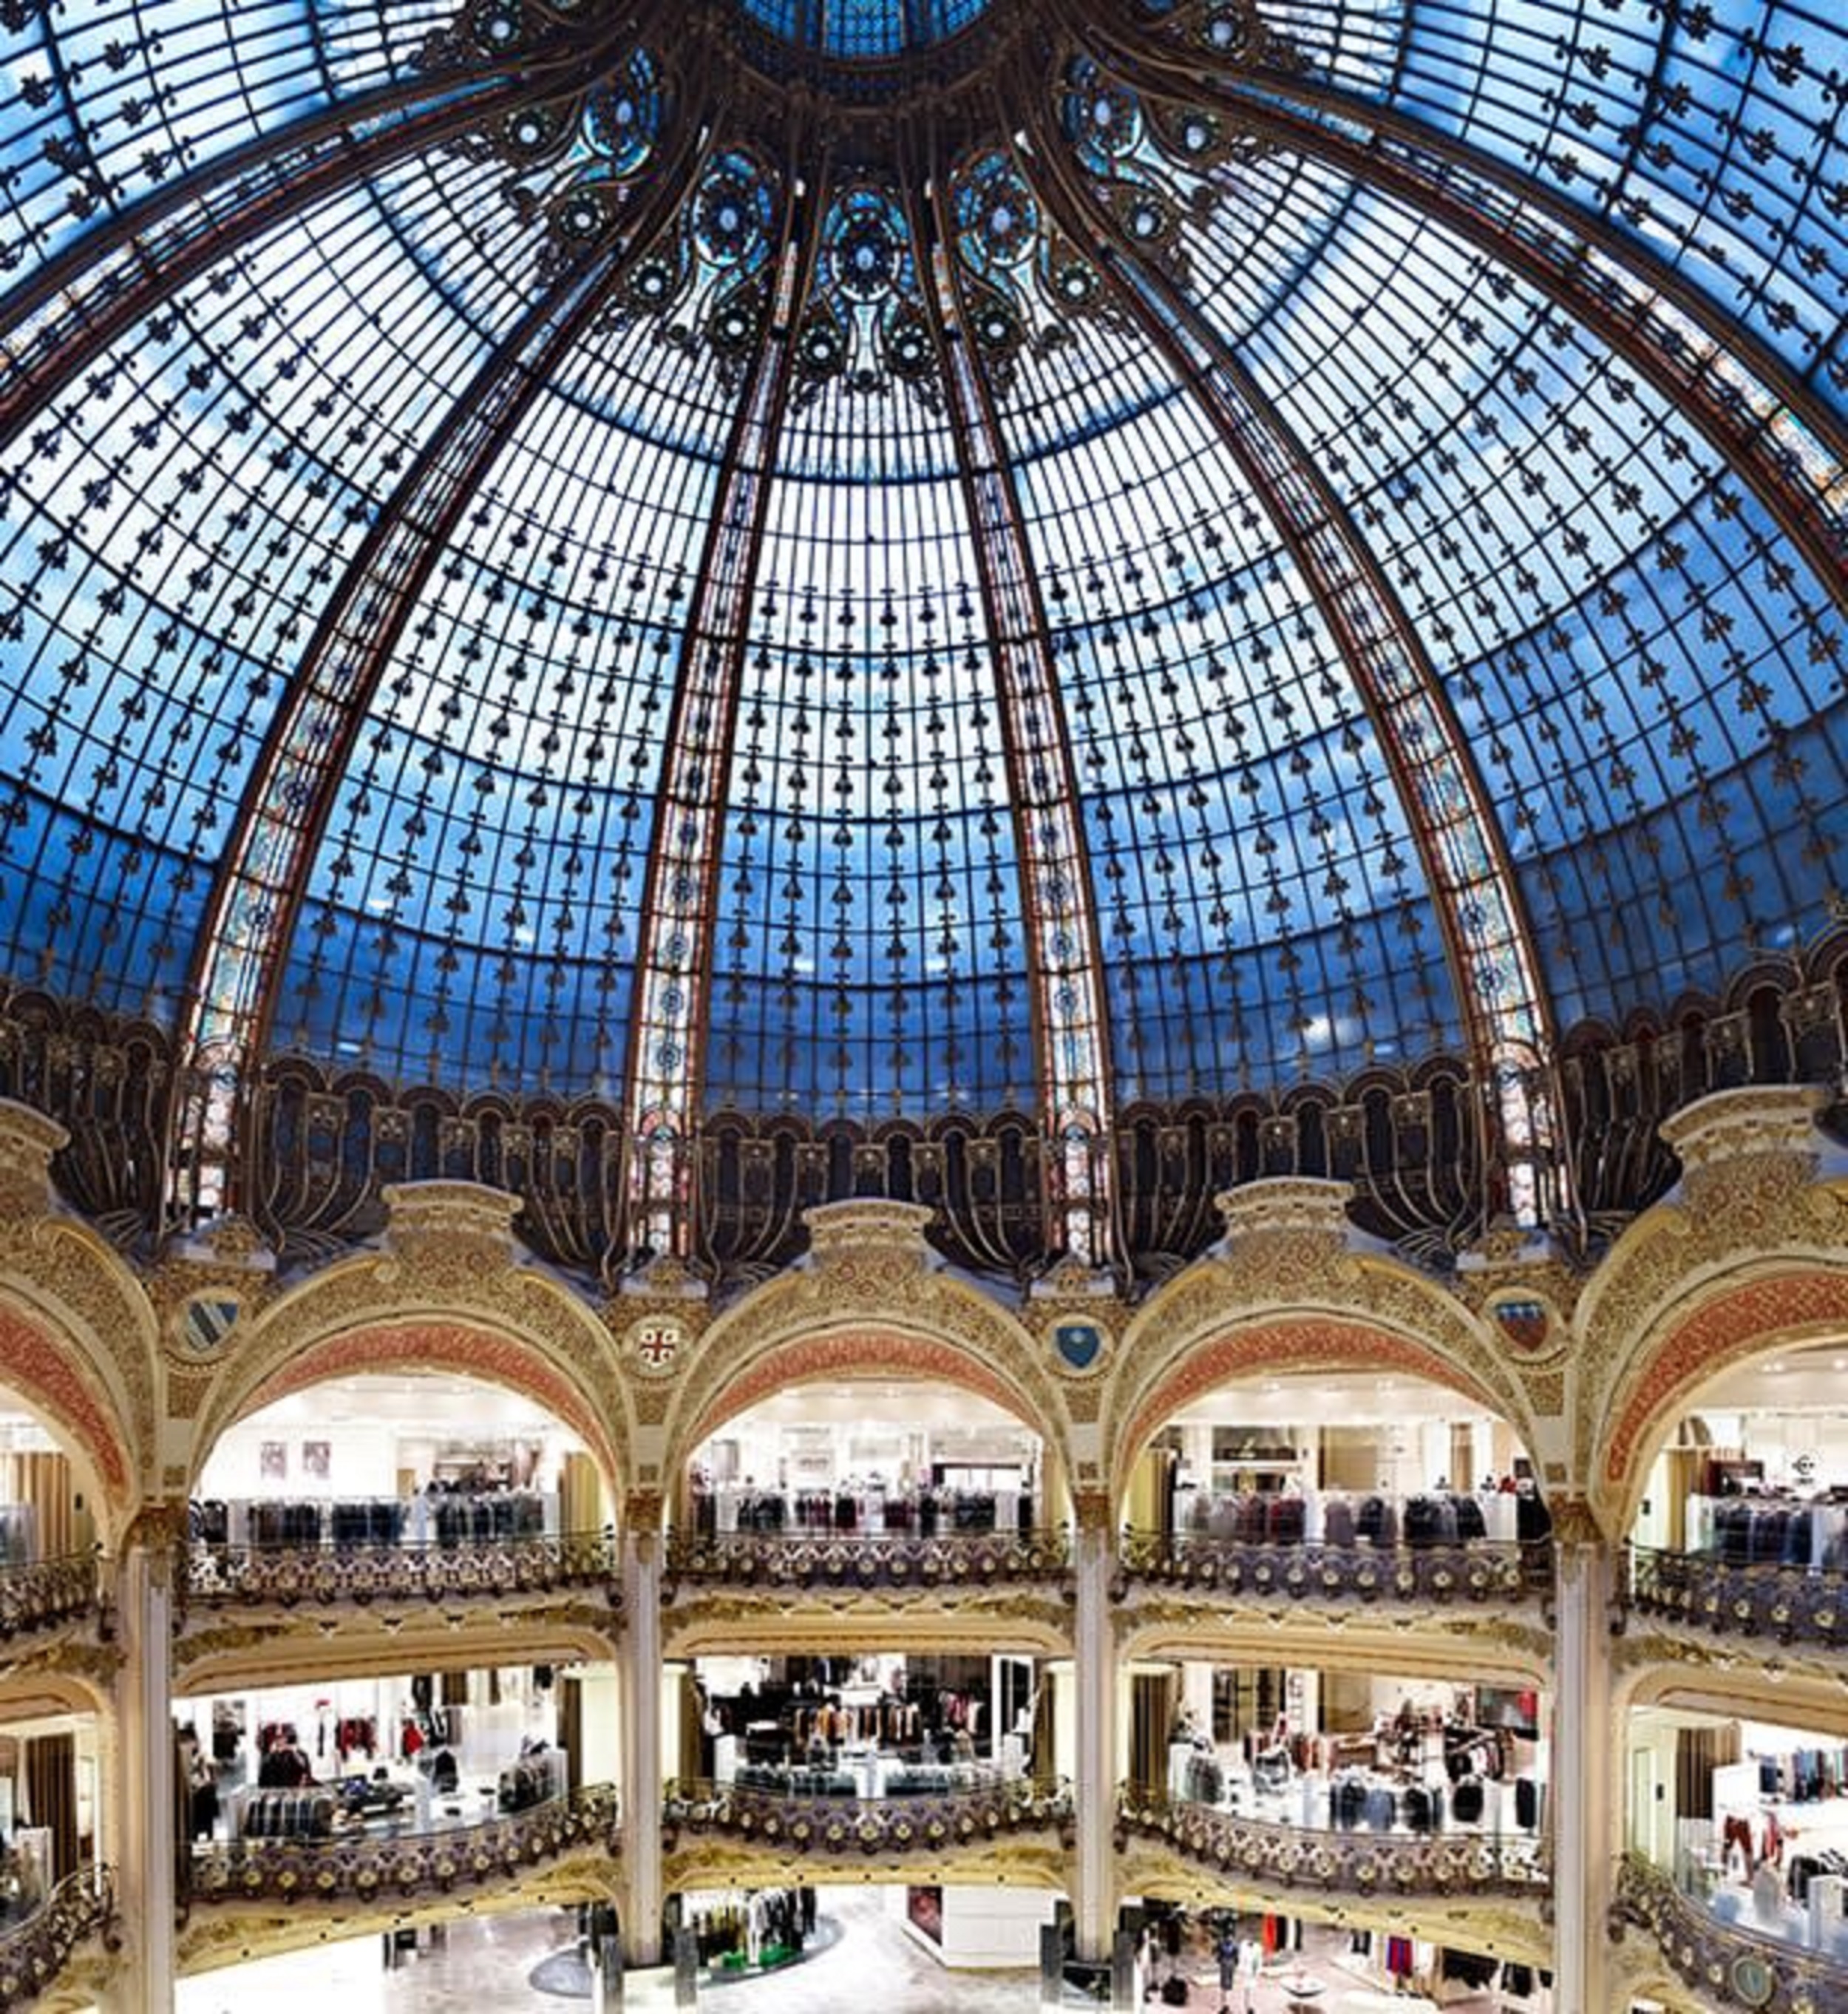 Shopping Galeries Lafayette in Paris - Travel Past 50